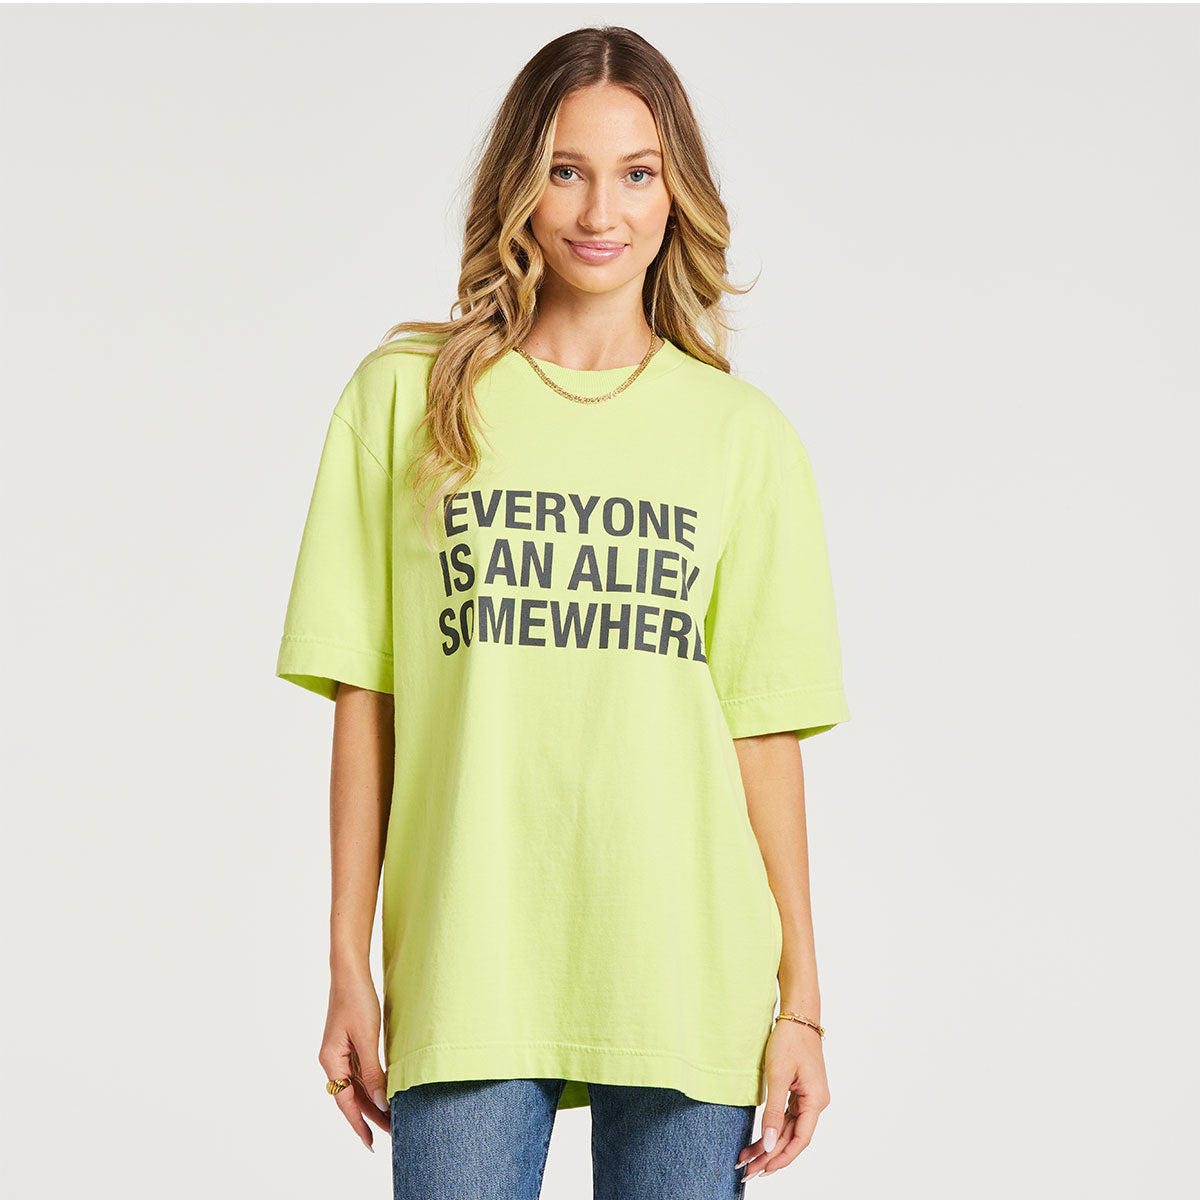 Everyone Is An Alien Somewhere - Green Tee